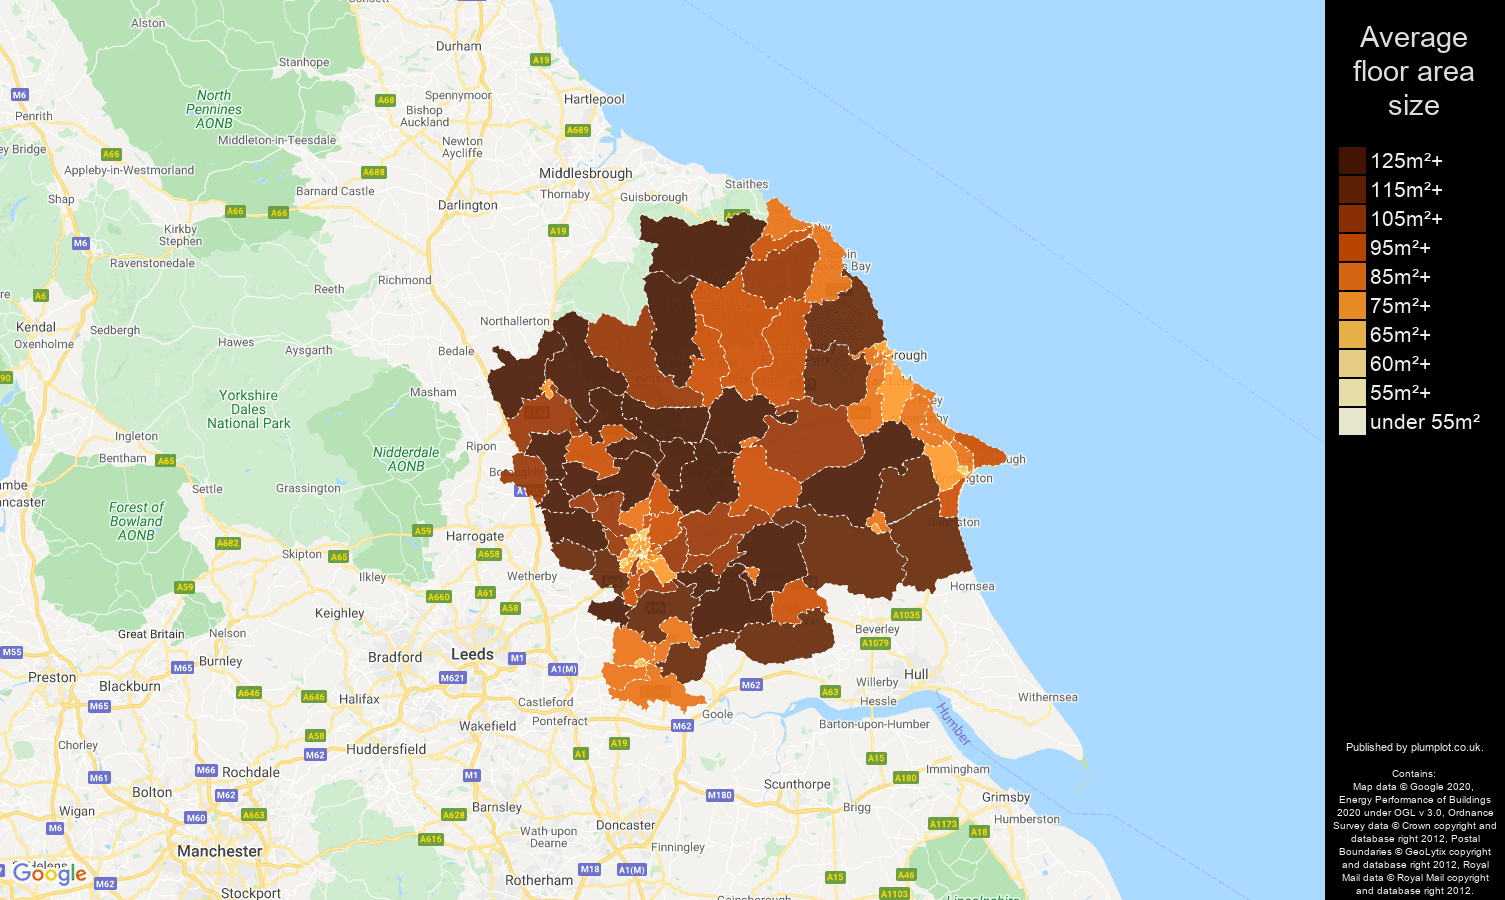 York map of average floor area size of properties